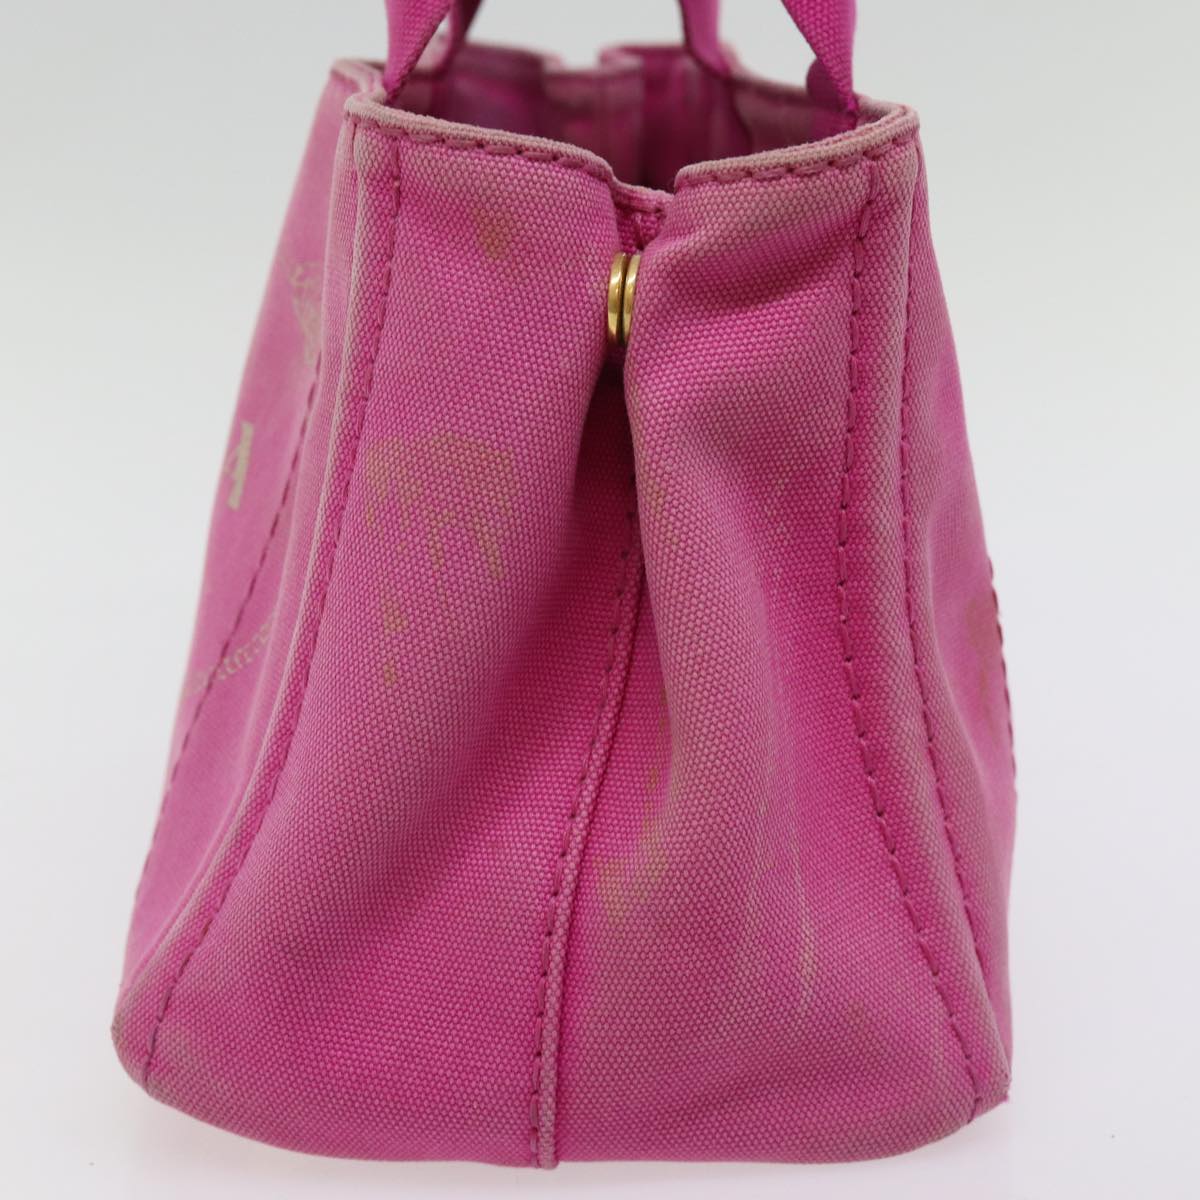 PRADA Canapa PM Hand Bag Canvas 2way Pink Auth 76984